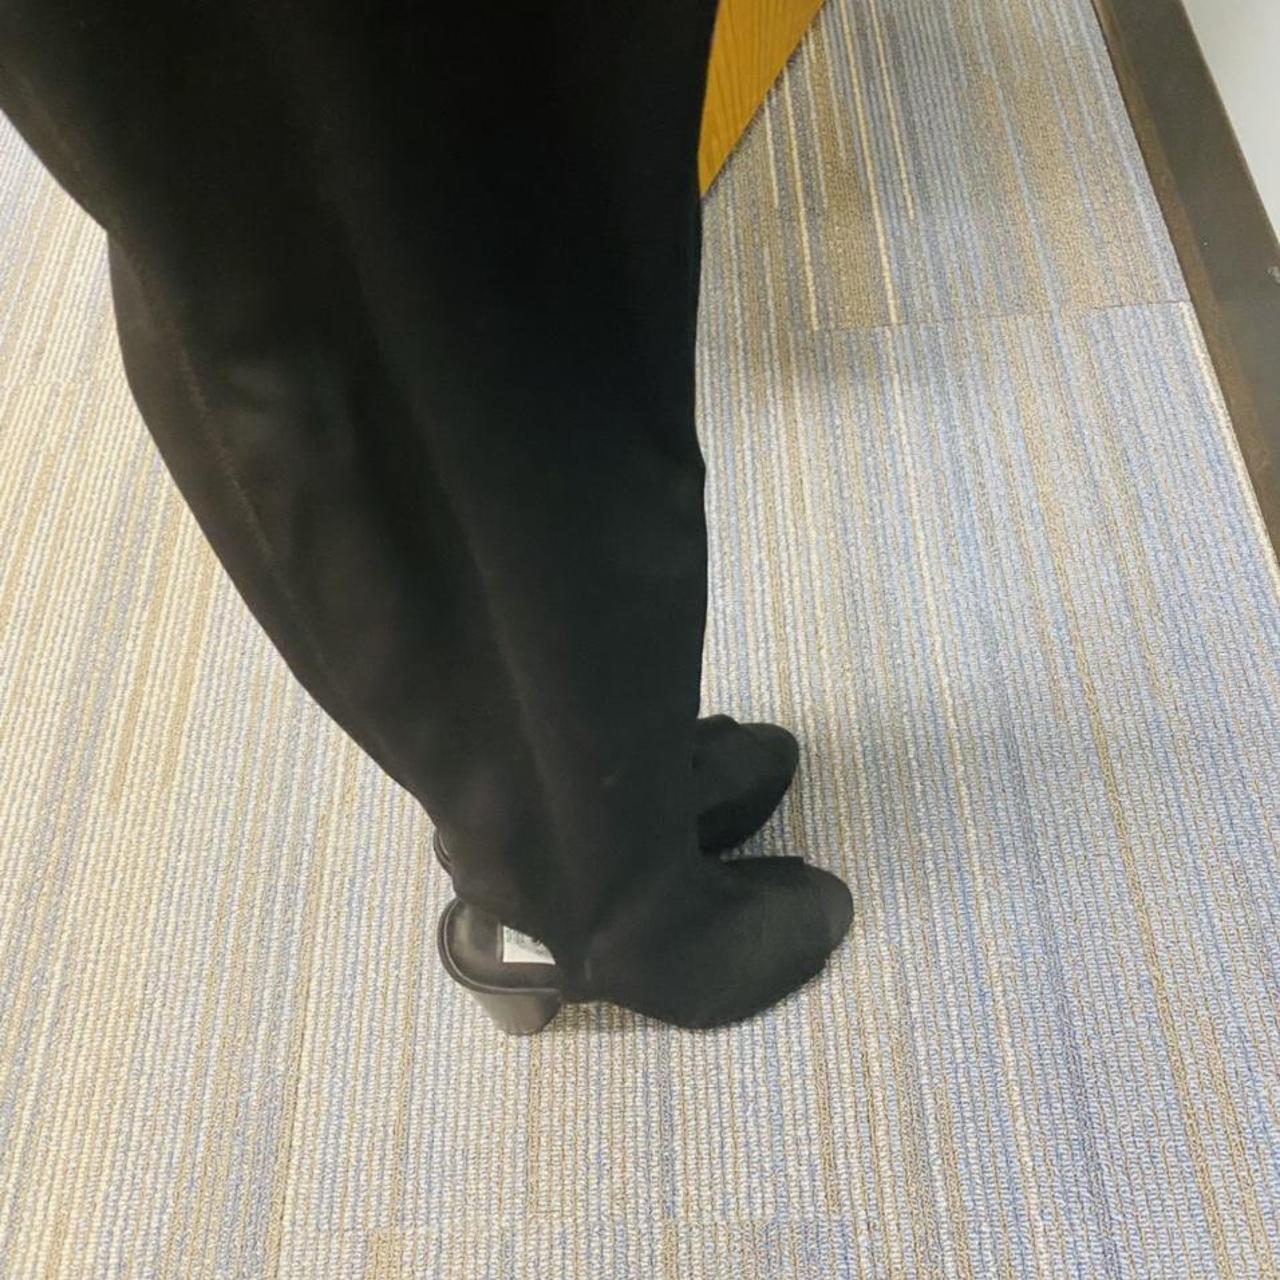 Women's Black Boots (3)